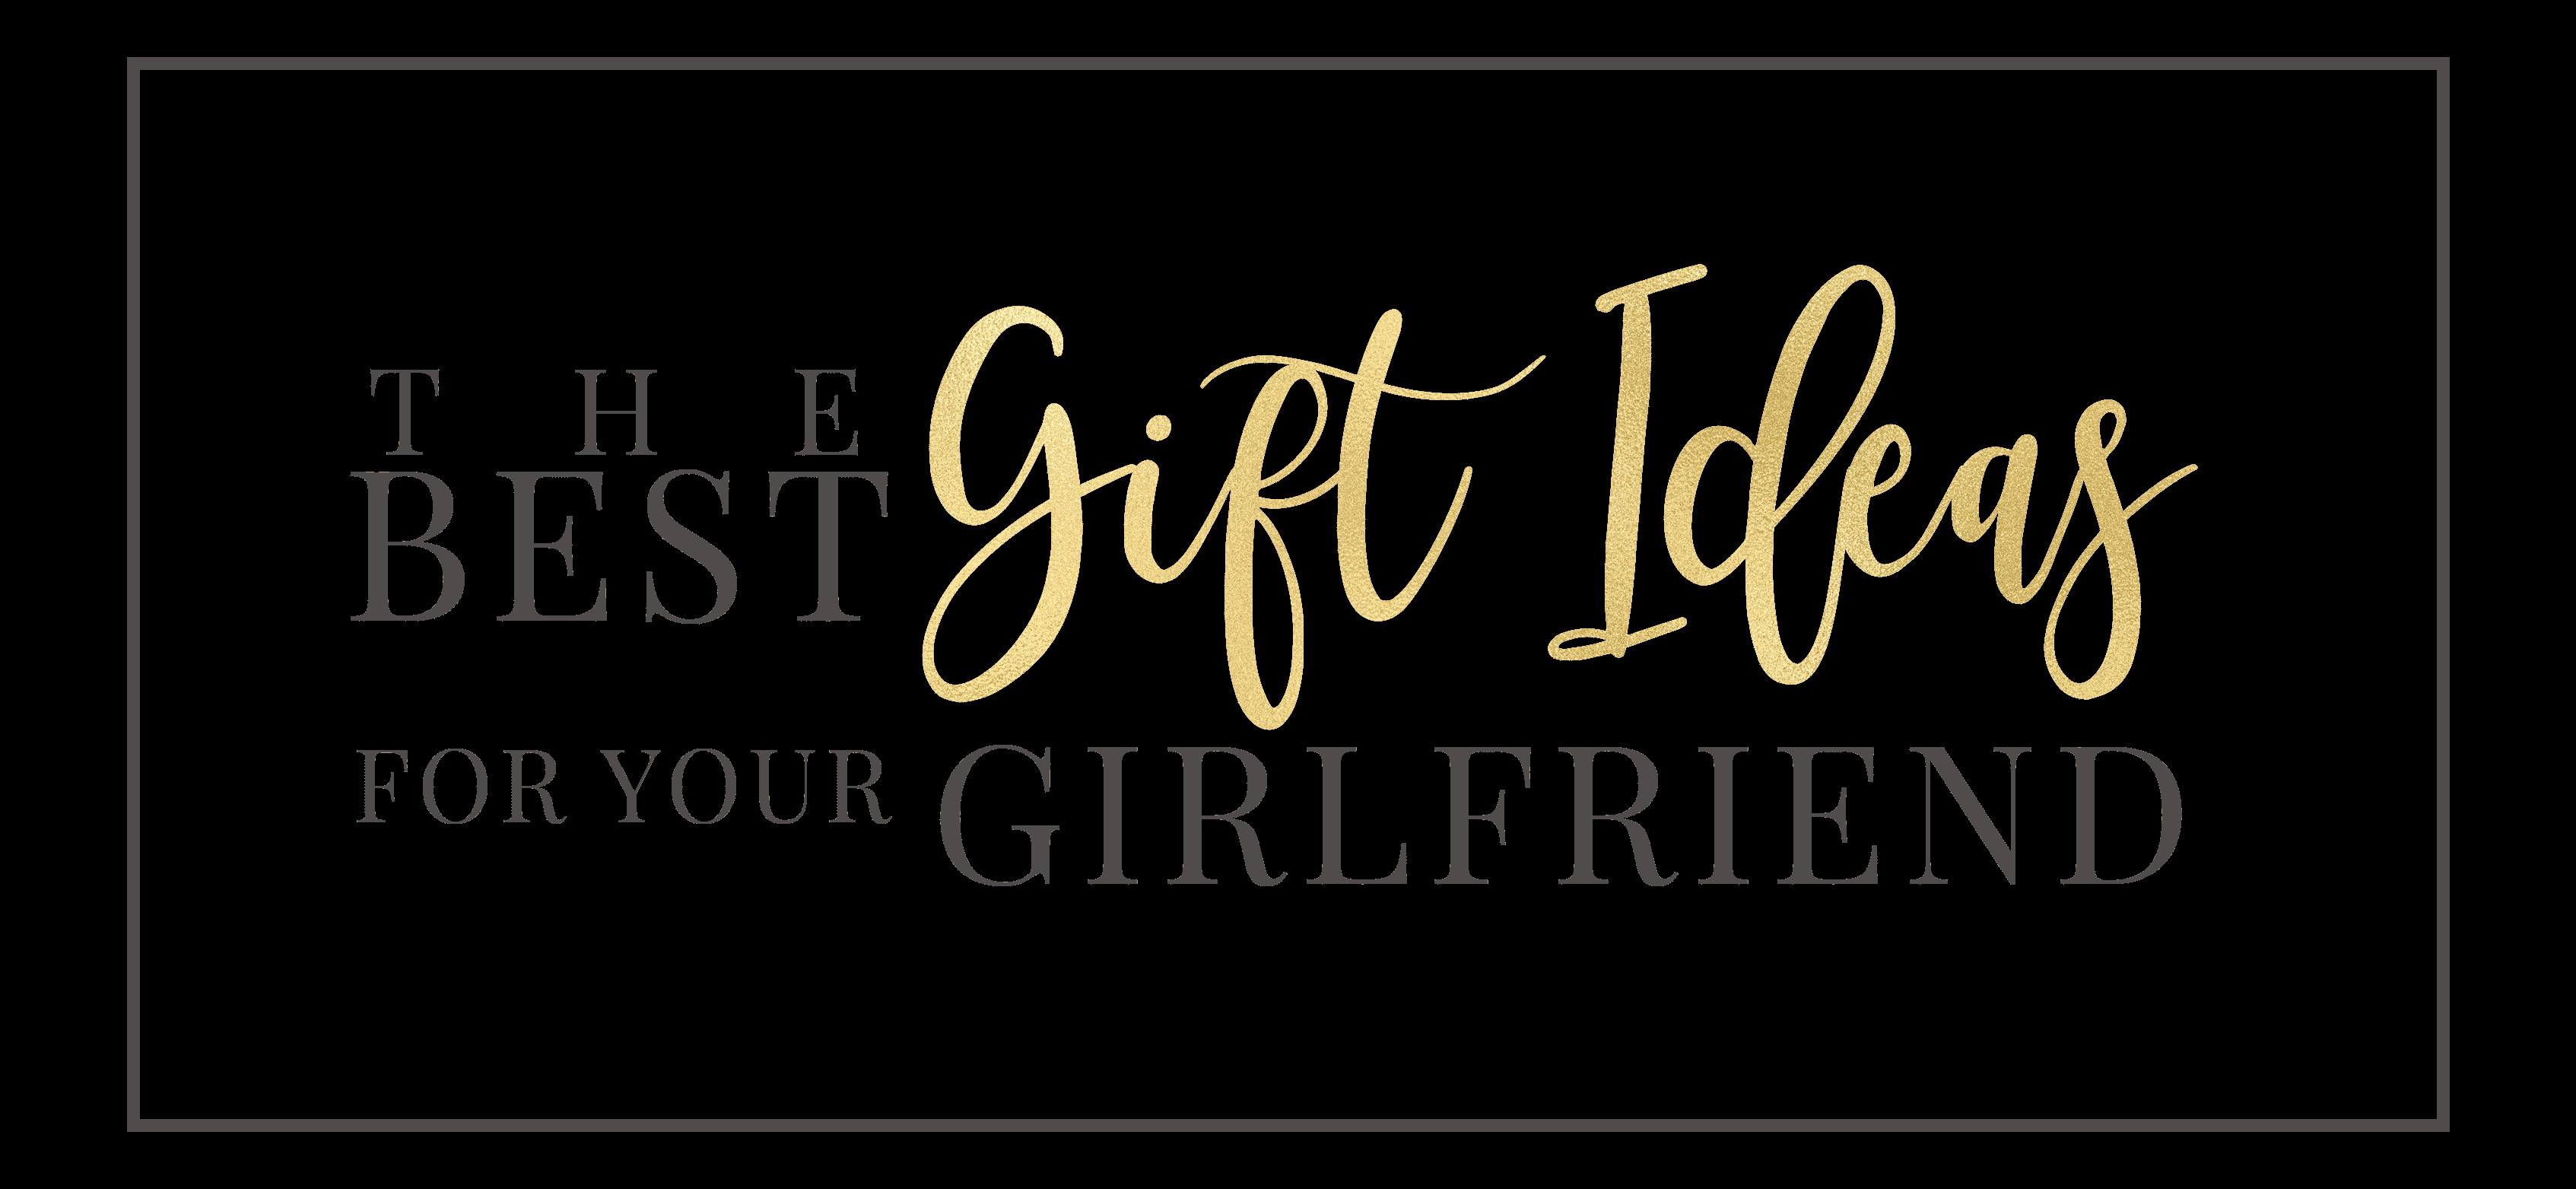 Best Gift Ideas For Your Girlfriend
 TheBestGiftIdeasForYourGirlfriendlogo1 The Best Gift